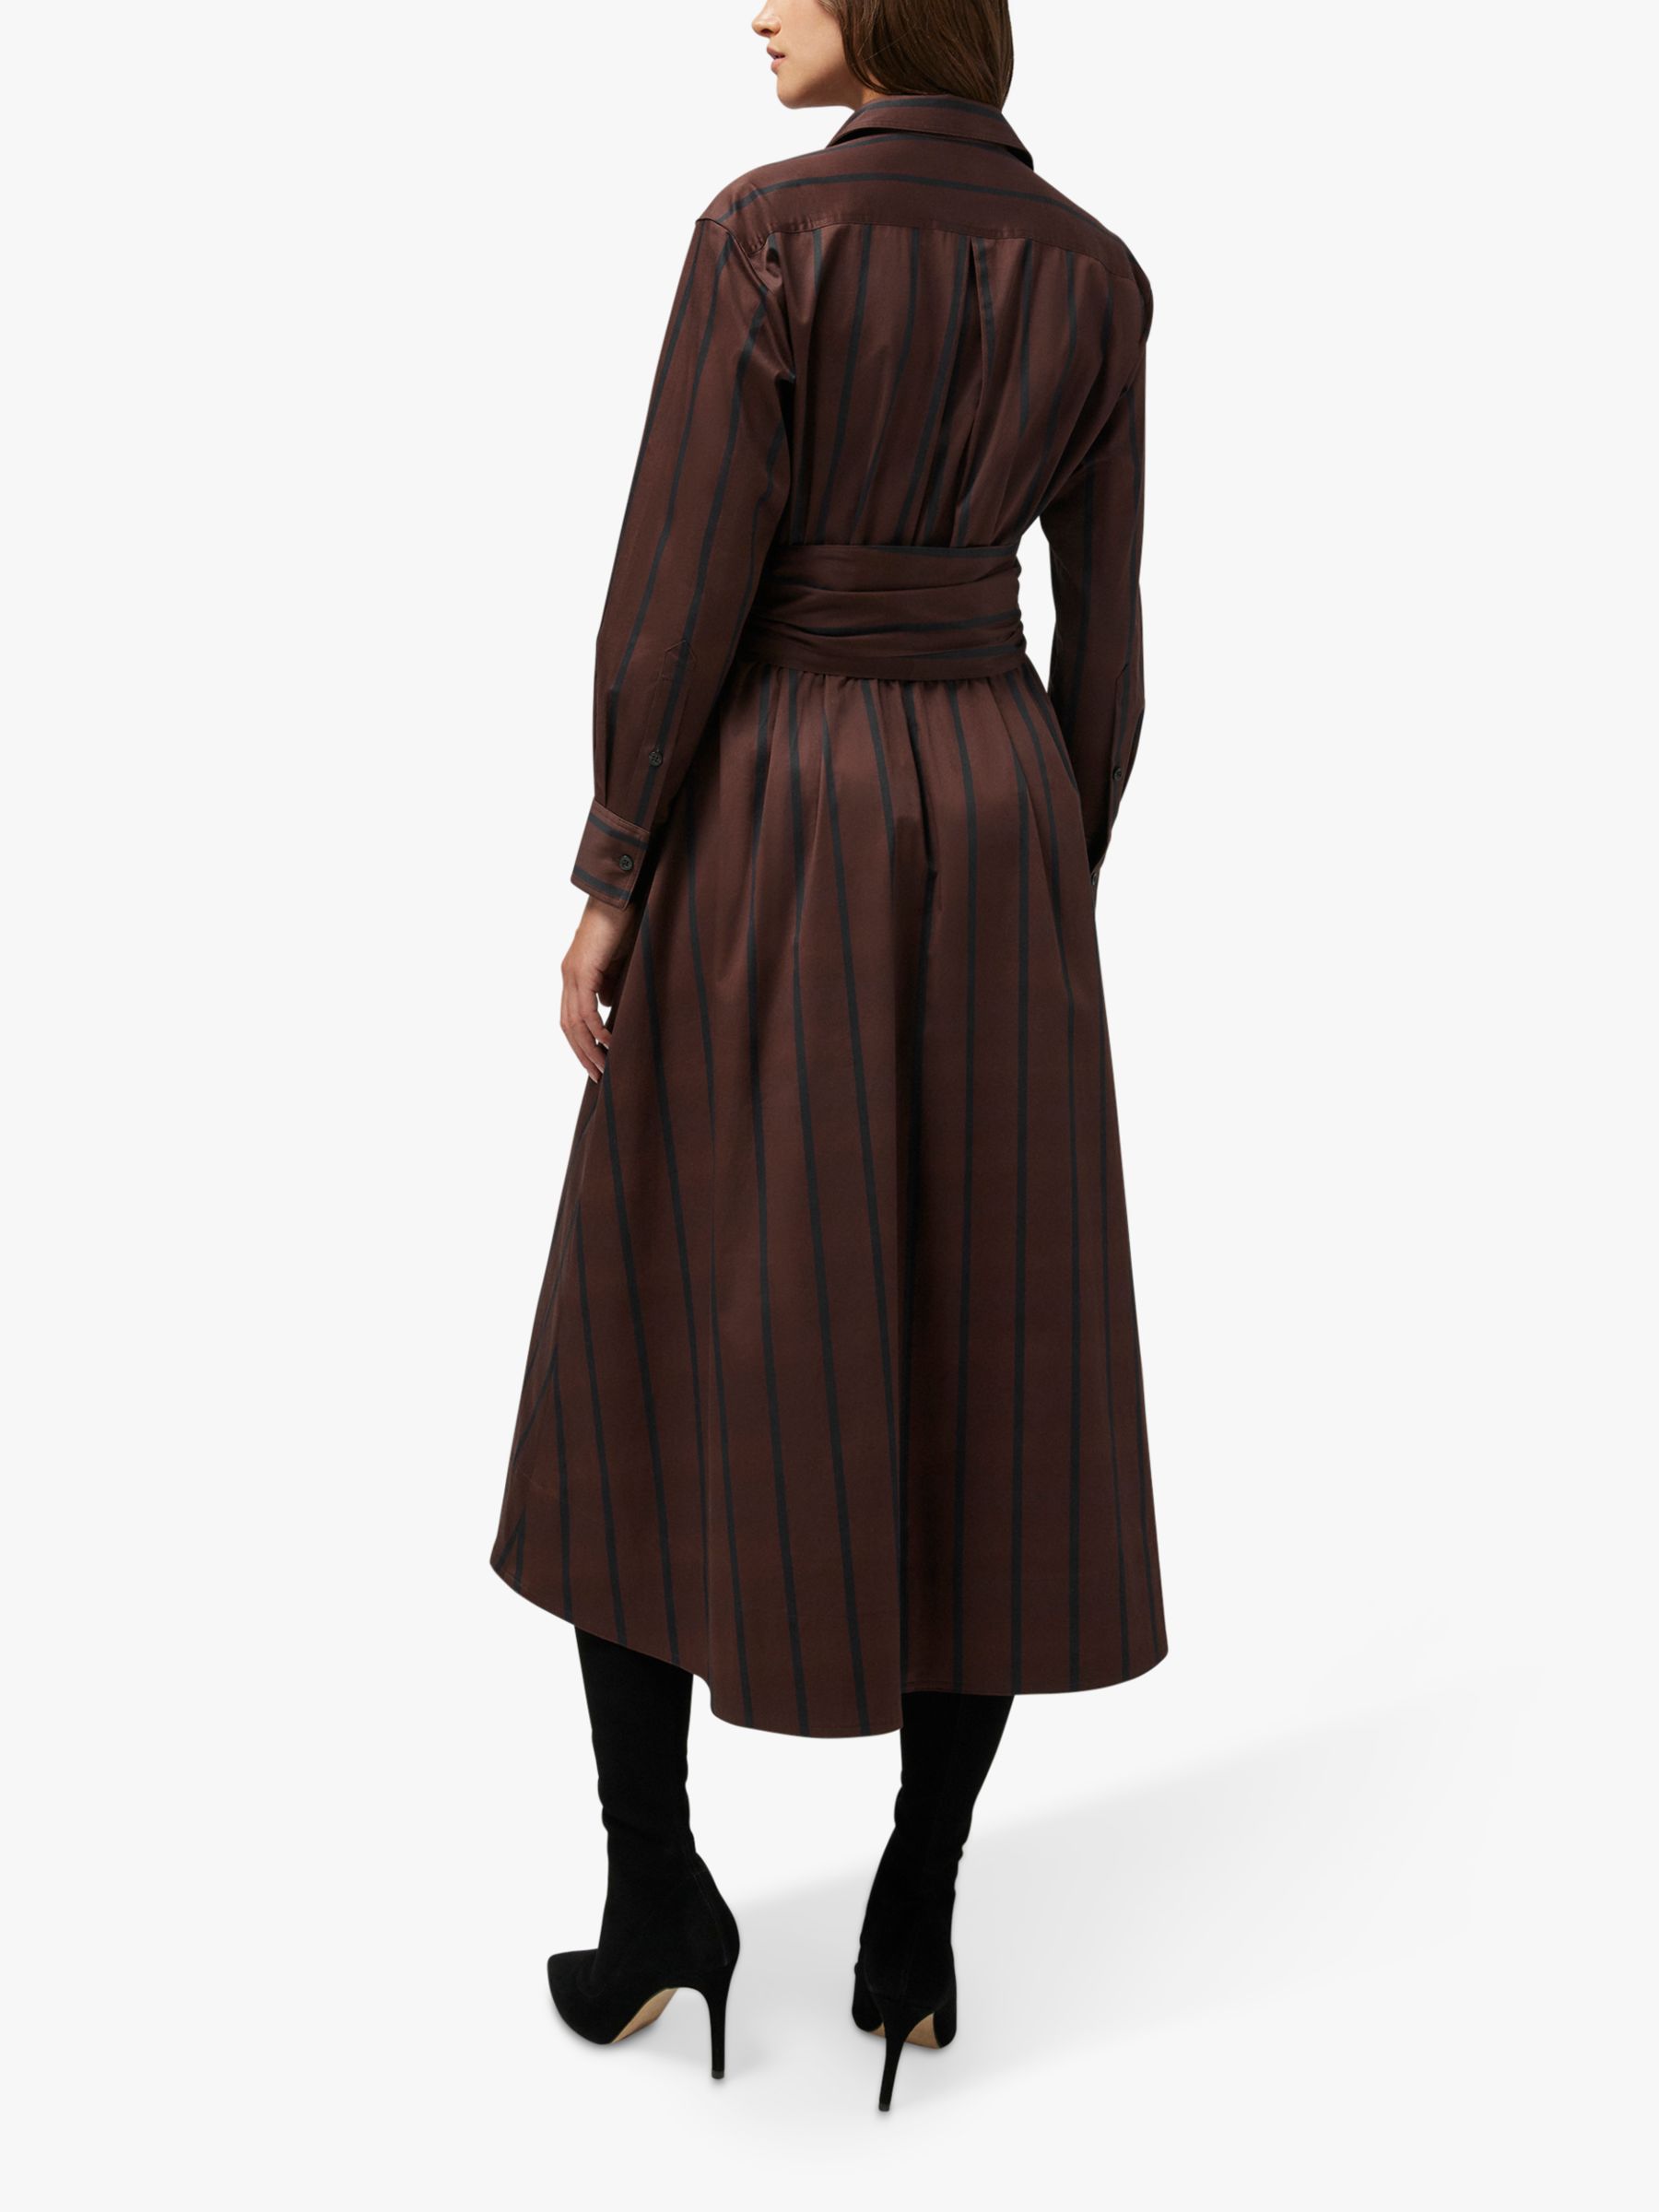 Jasper Conran Blythe Shirt Dress, Choc at John Lewis & Partners